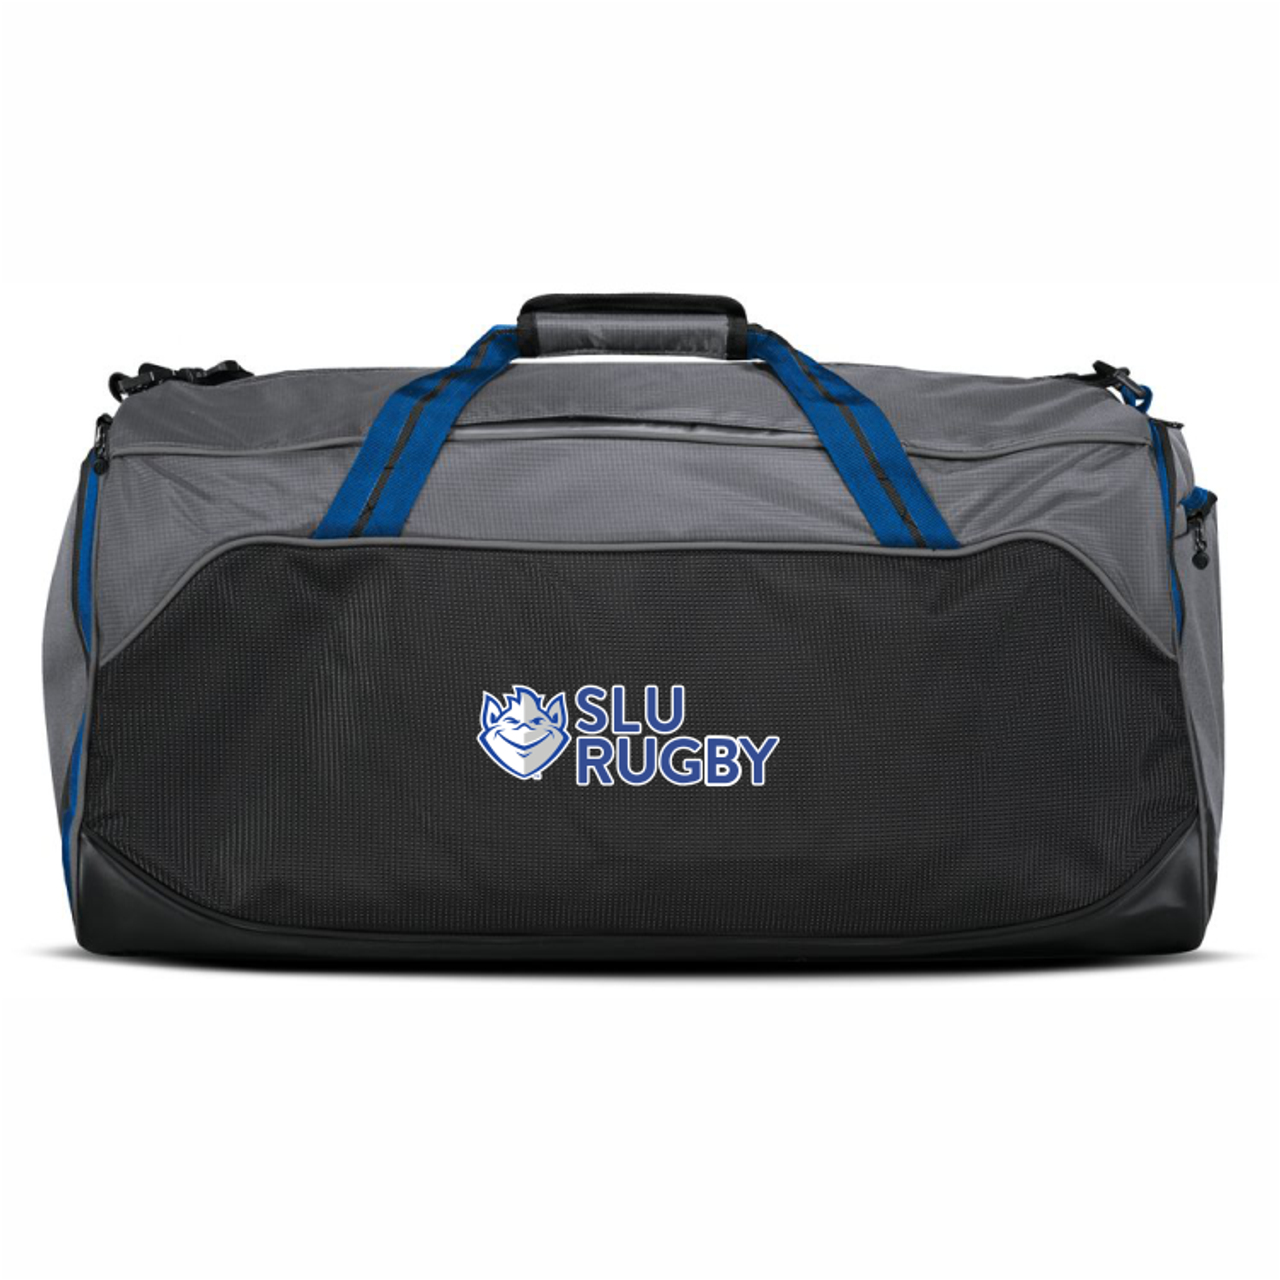 Manly Sea Eagles NRL 2020 Stealth Backpack Travel Training School Bag!